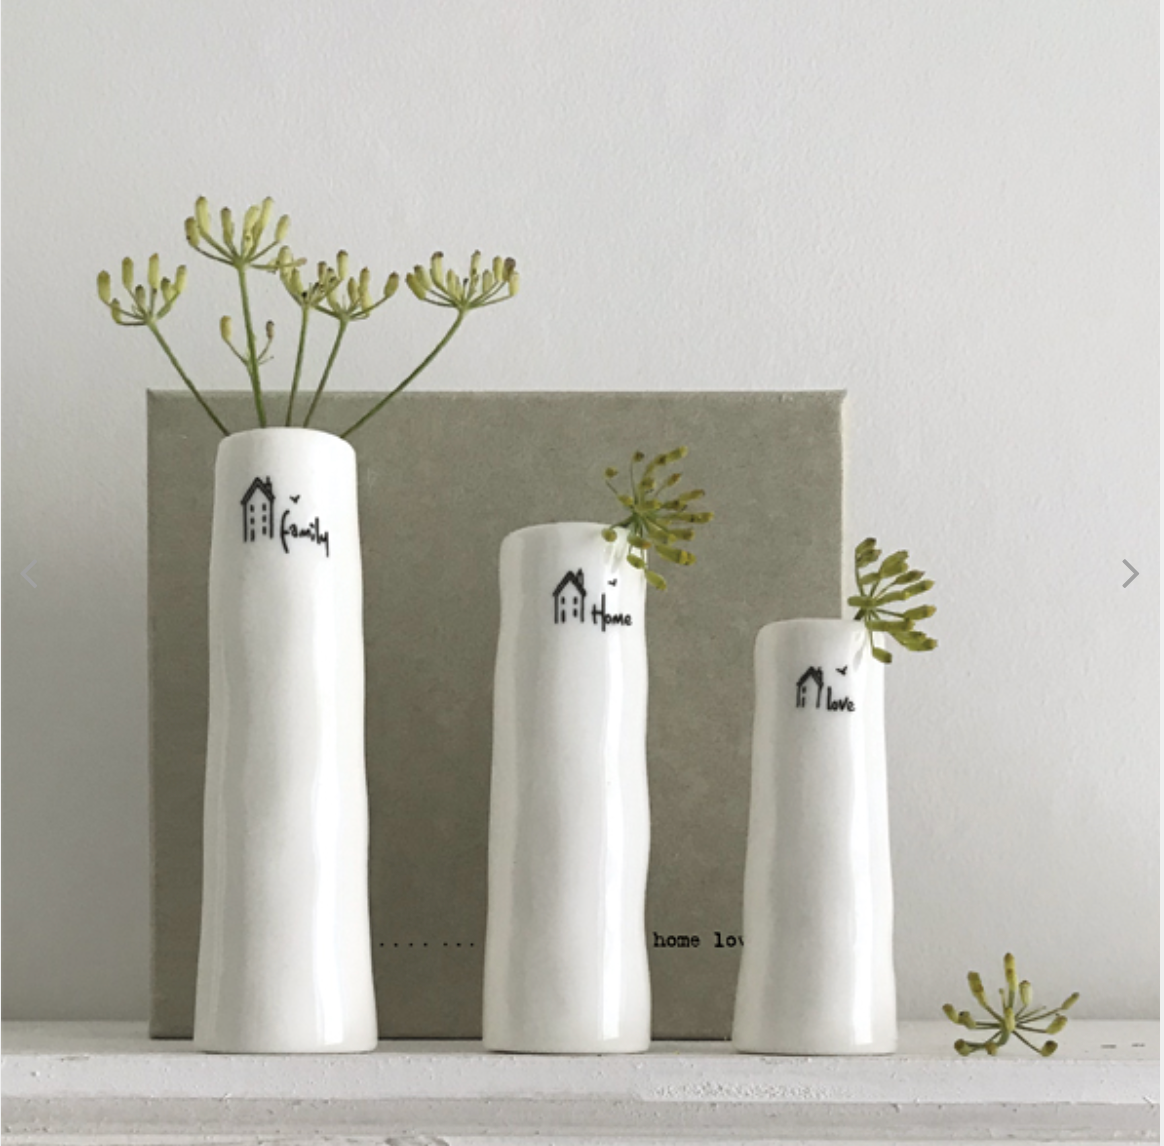 Family, Love, Home Trio of Vases